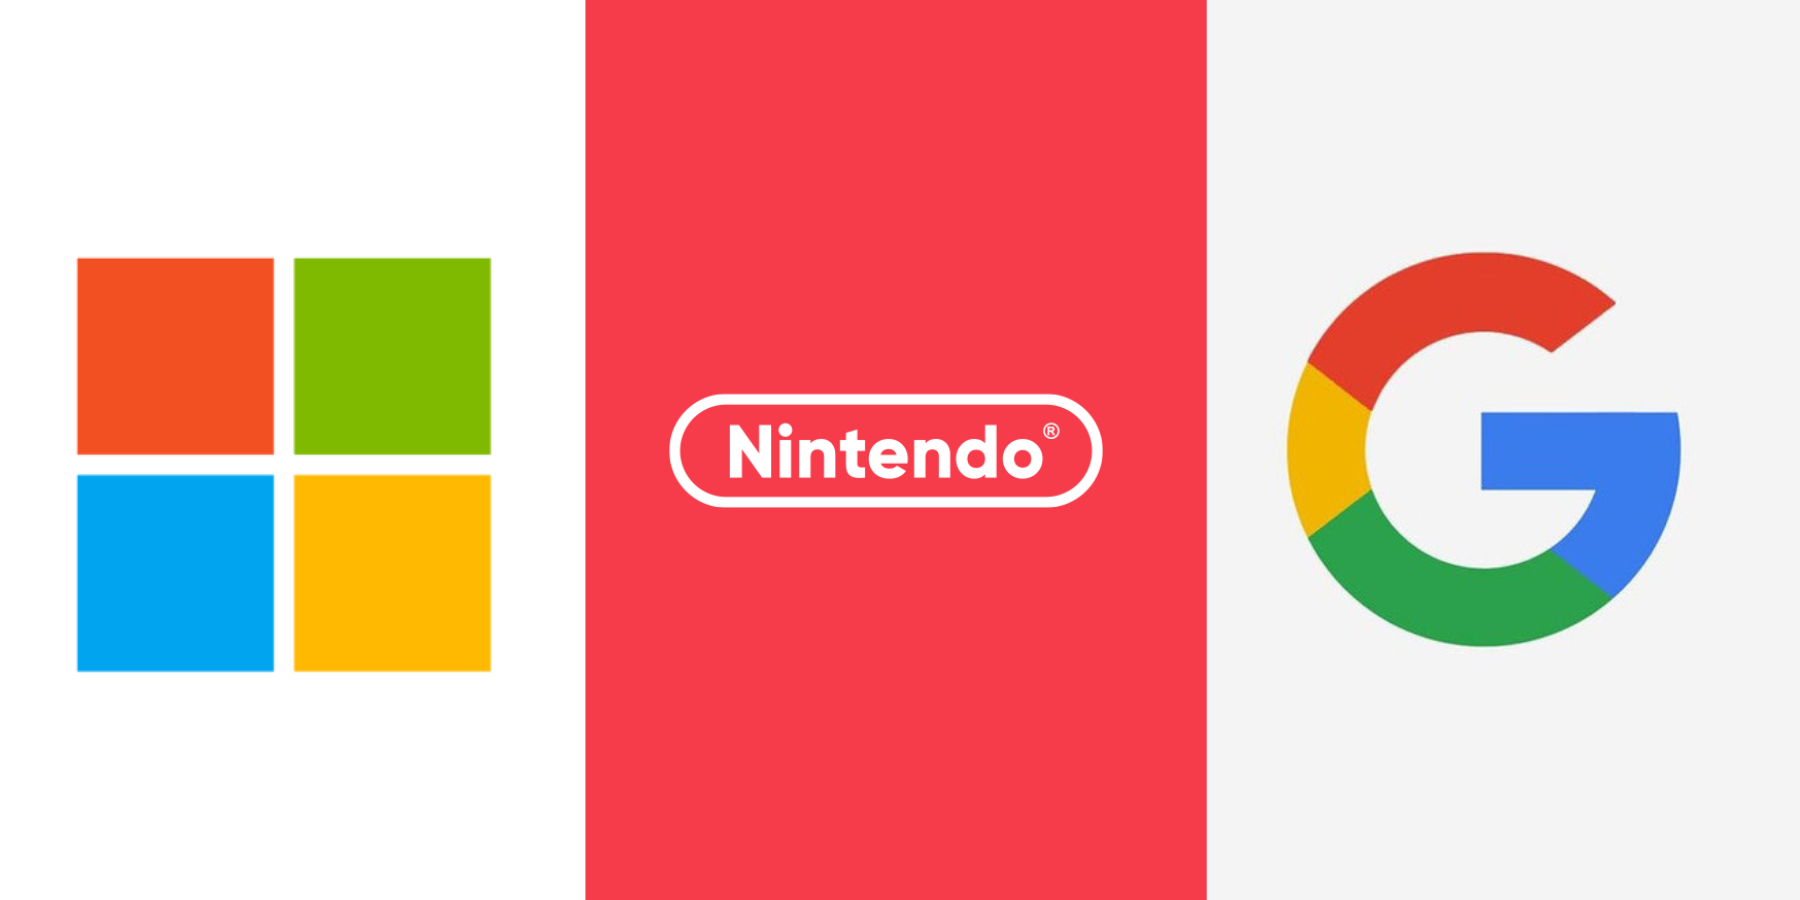 Microsoft, Nintendo, and Google logos.